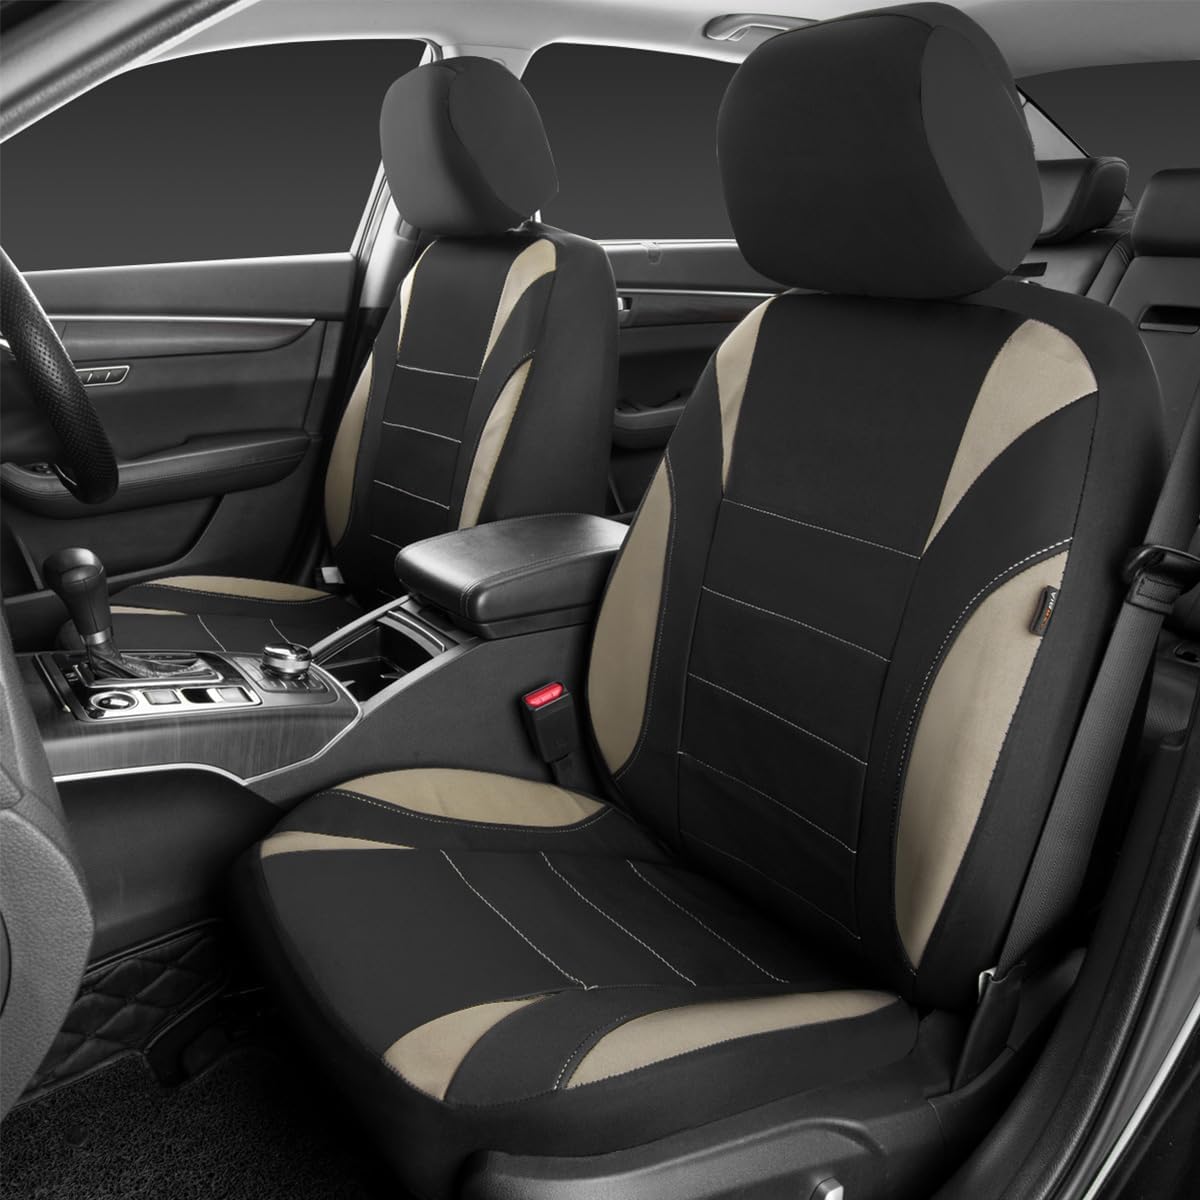 CAR PASS Waterproof Neoprene EVA 11 Piece Universal fit Car Seat Covers,Fit for Suvs,Vans,Trucks,Sedans,Airbag Compatible,Inside Zipper Design (Black and Beige)